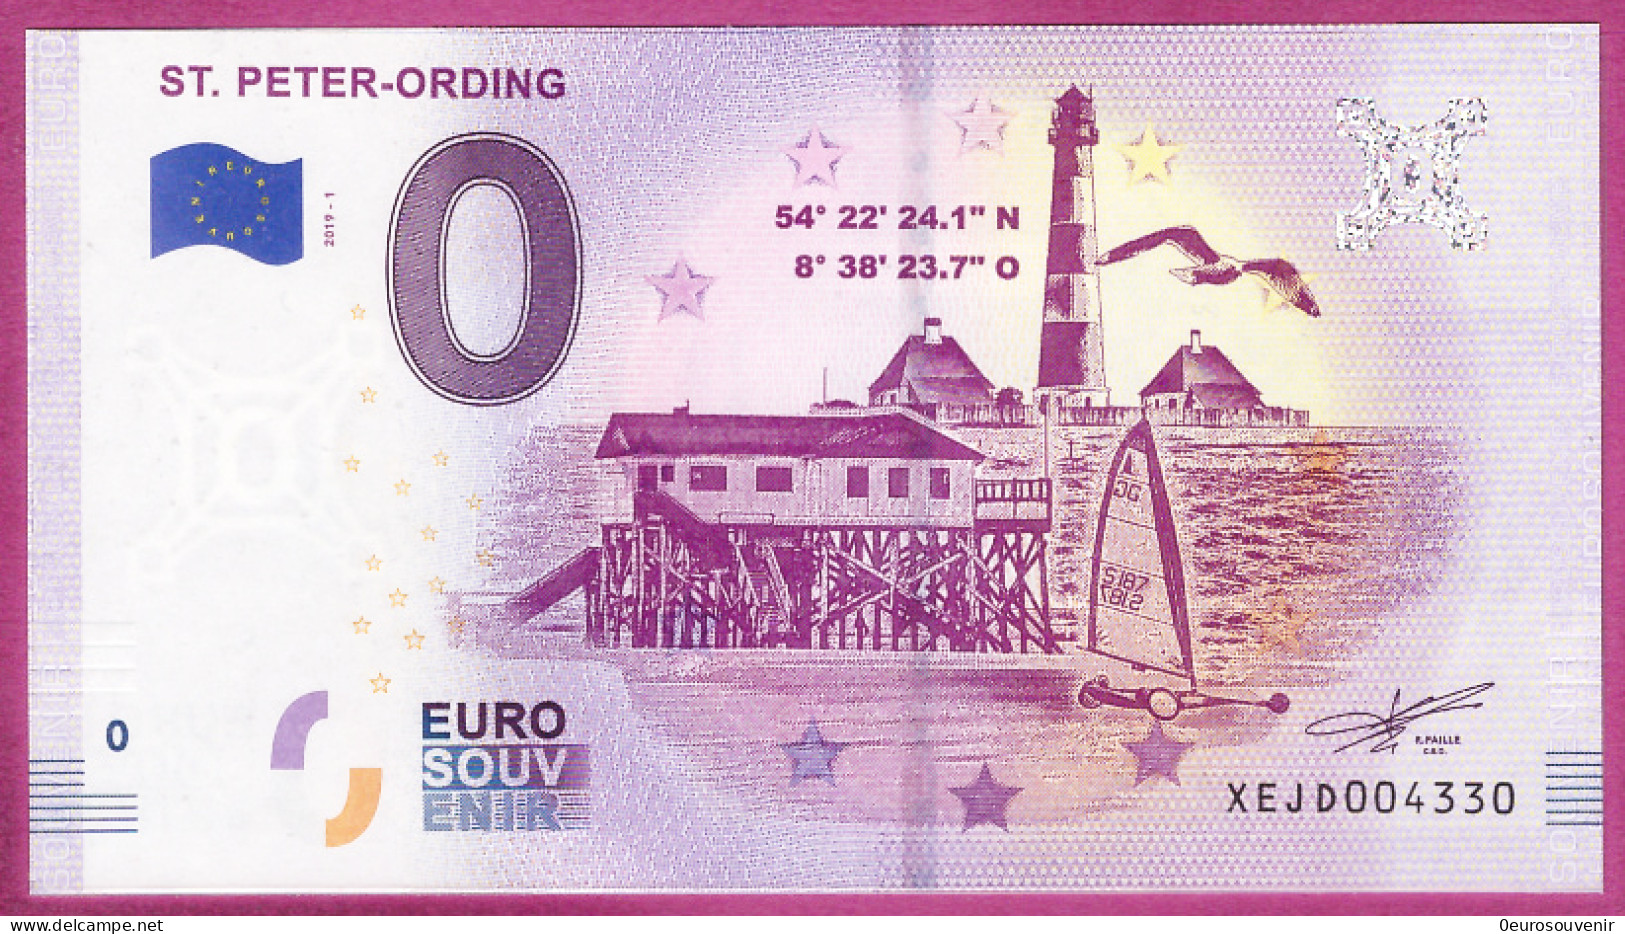 0-Euro XEJD 2019-1 ST. PETER-ORDING - LEUCHTTURM  HALLIG WESTERHEVERSAND - Private Proofs / Unofficial